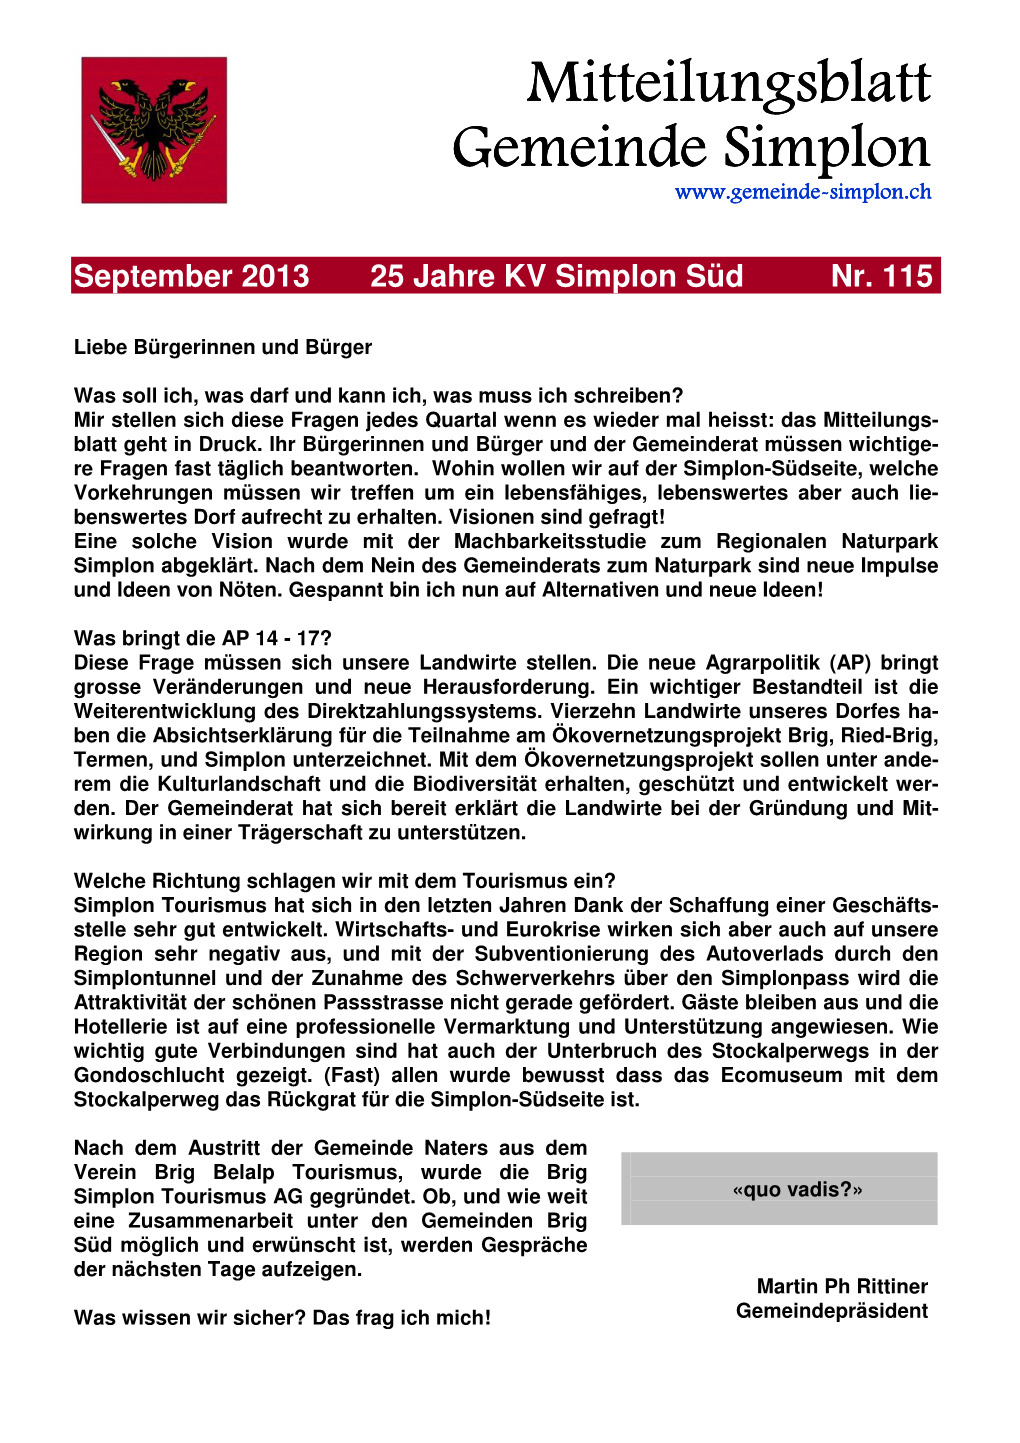 Mitteilungsblatt September 2013